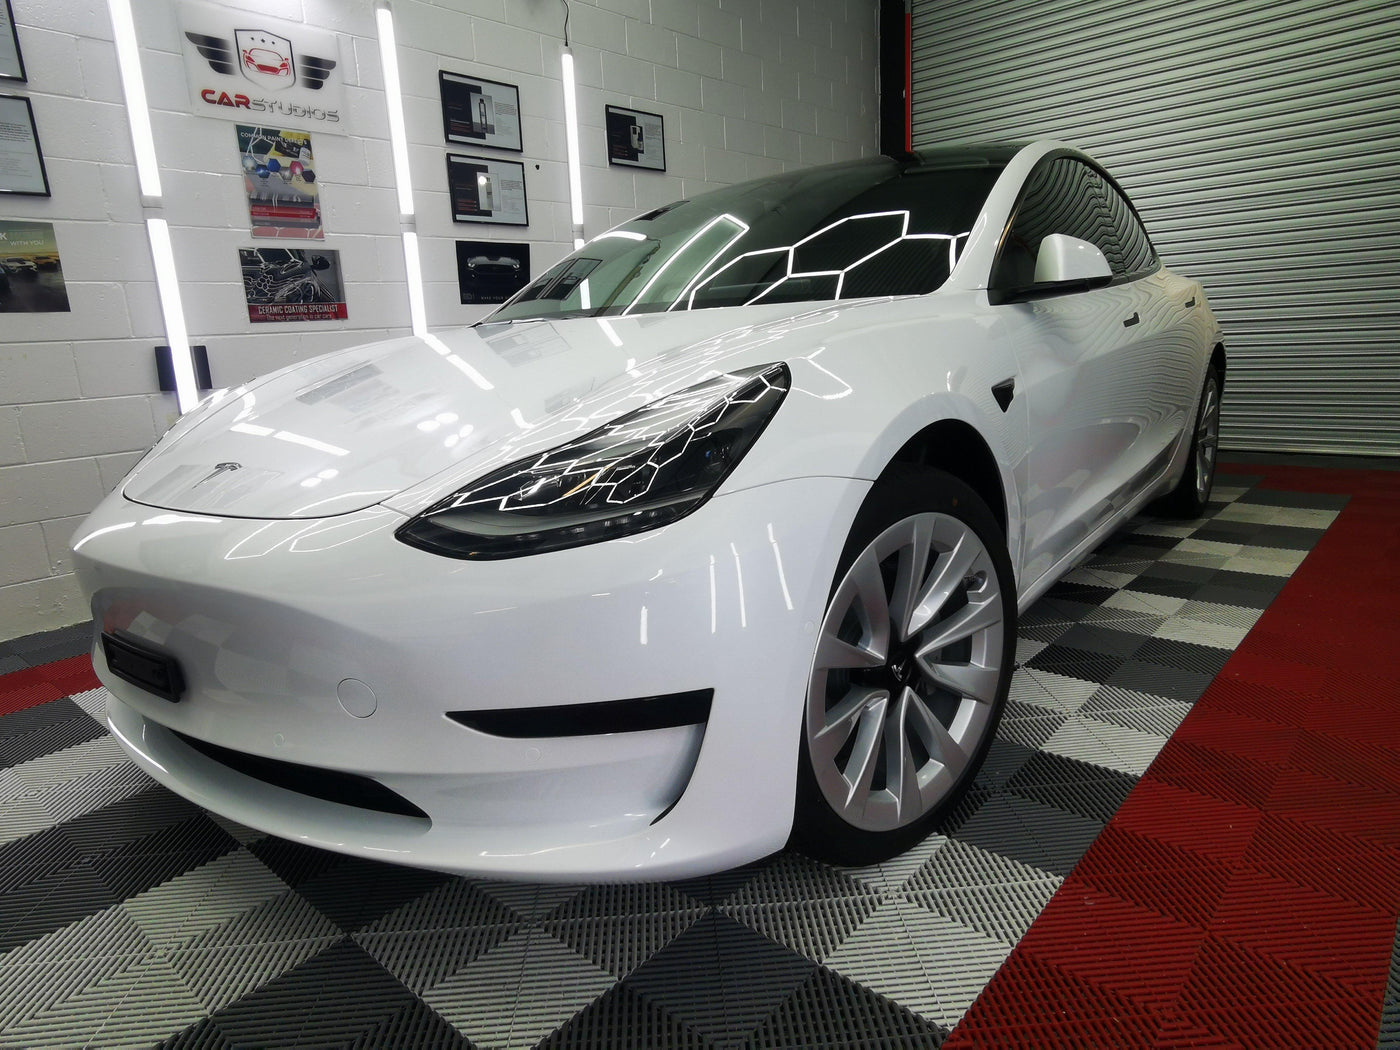 Tesla Model 3 - Car Studios